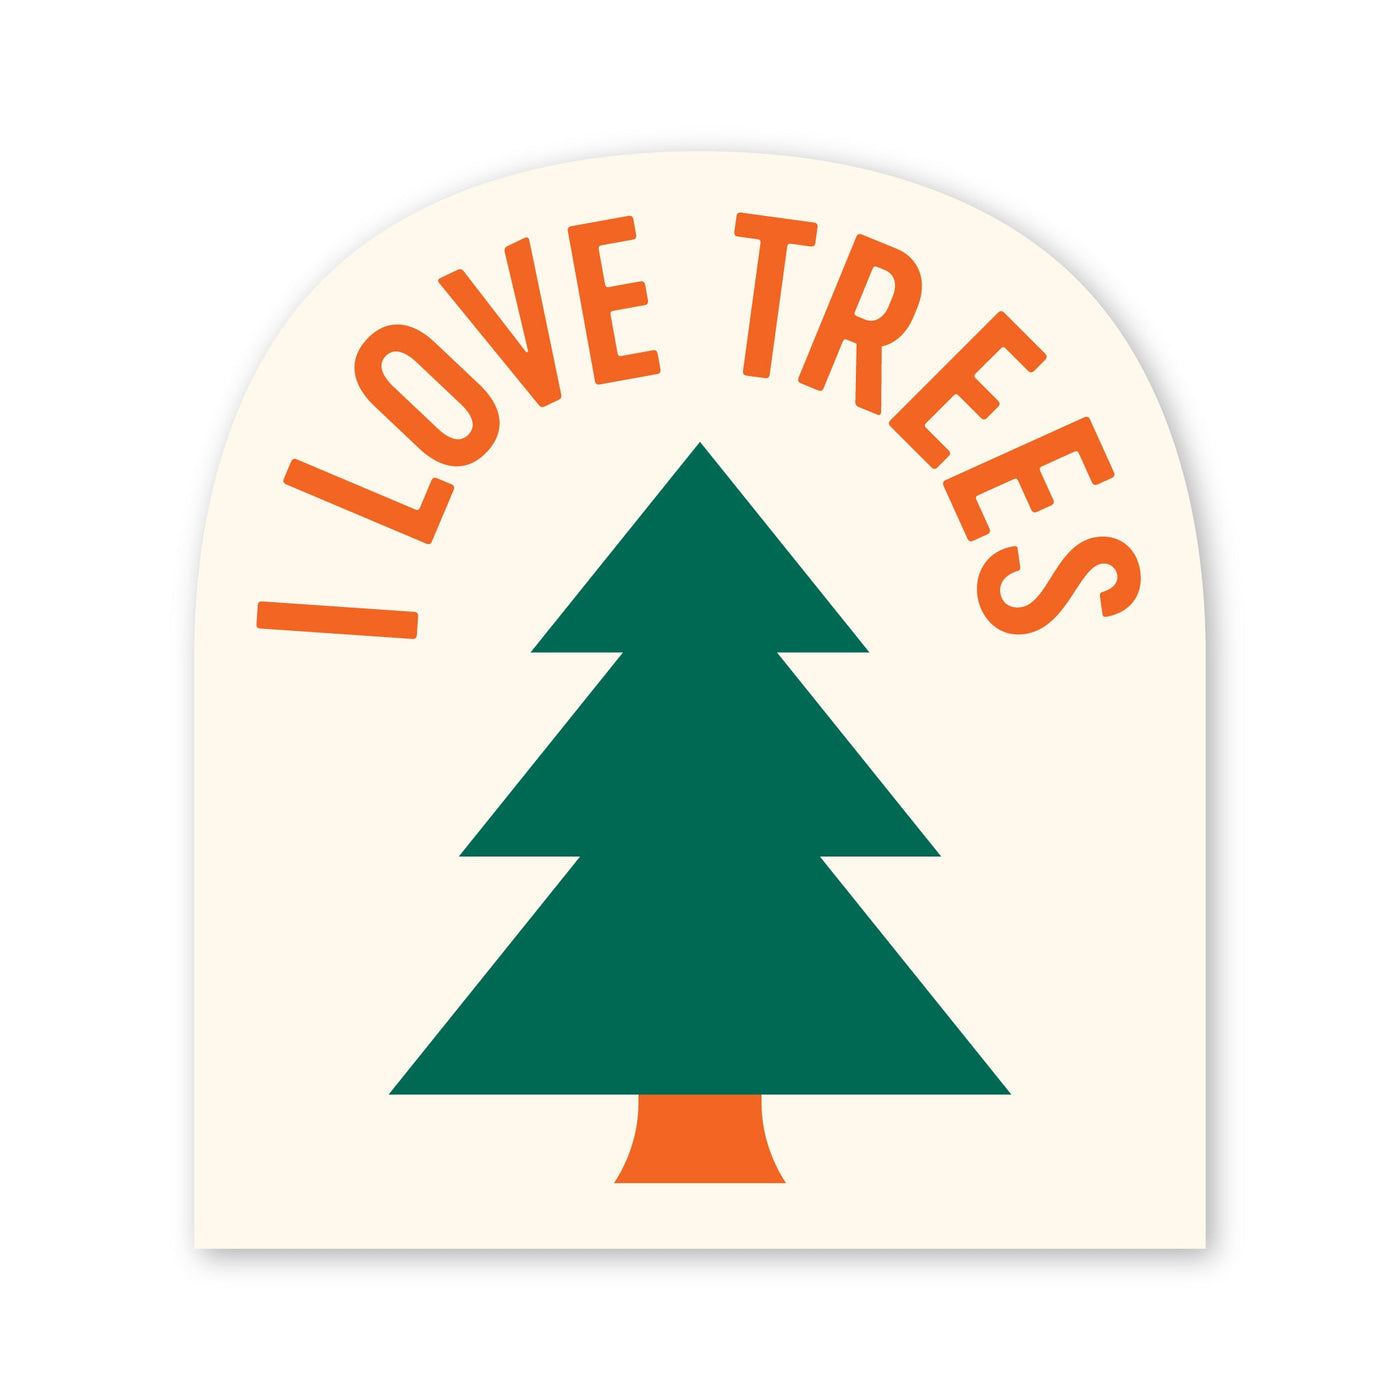 I Love Trees Sticker